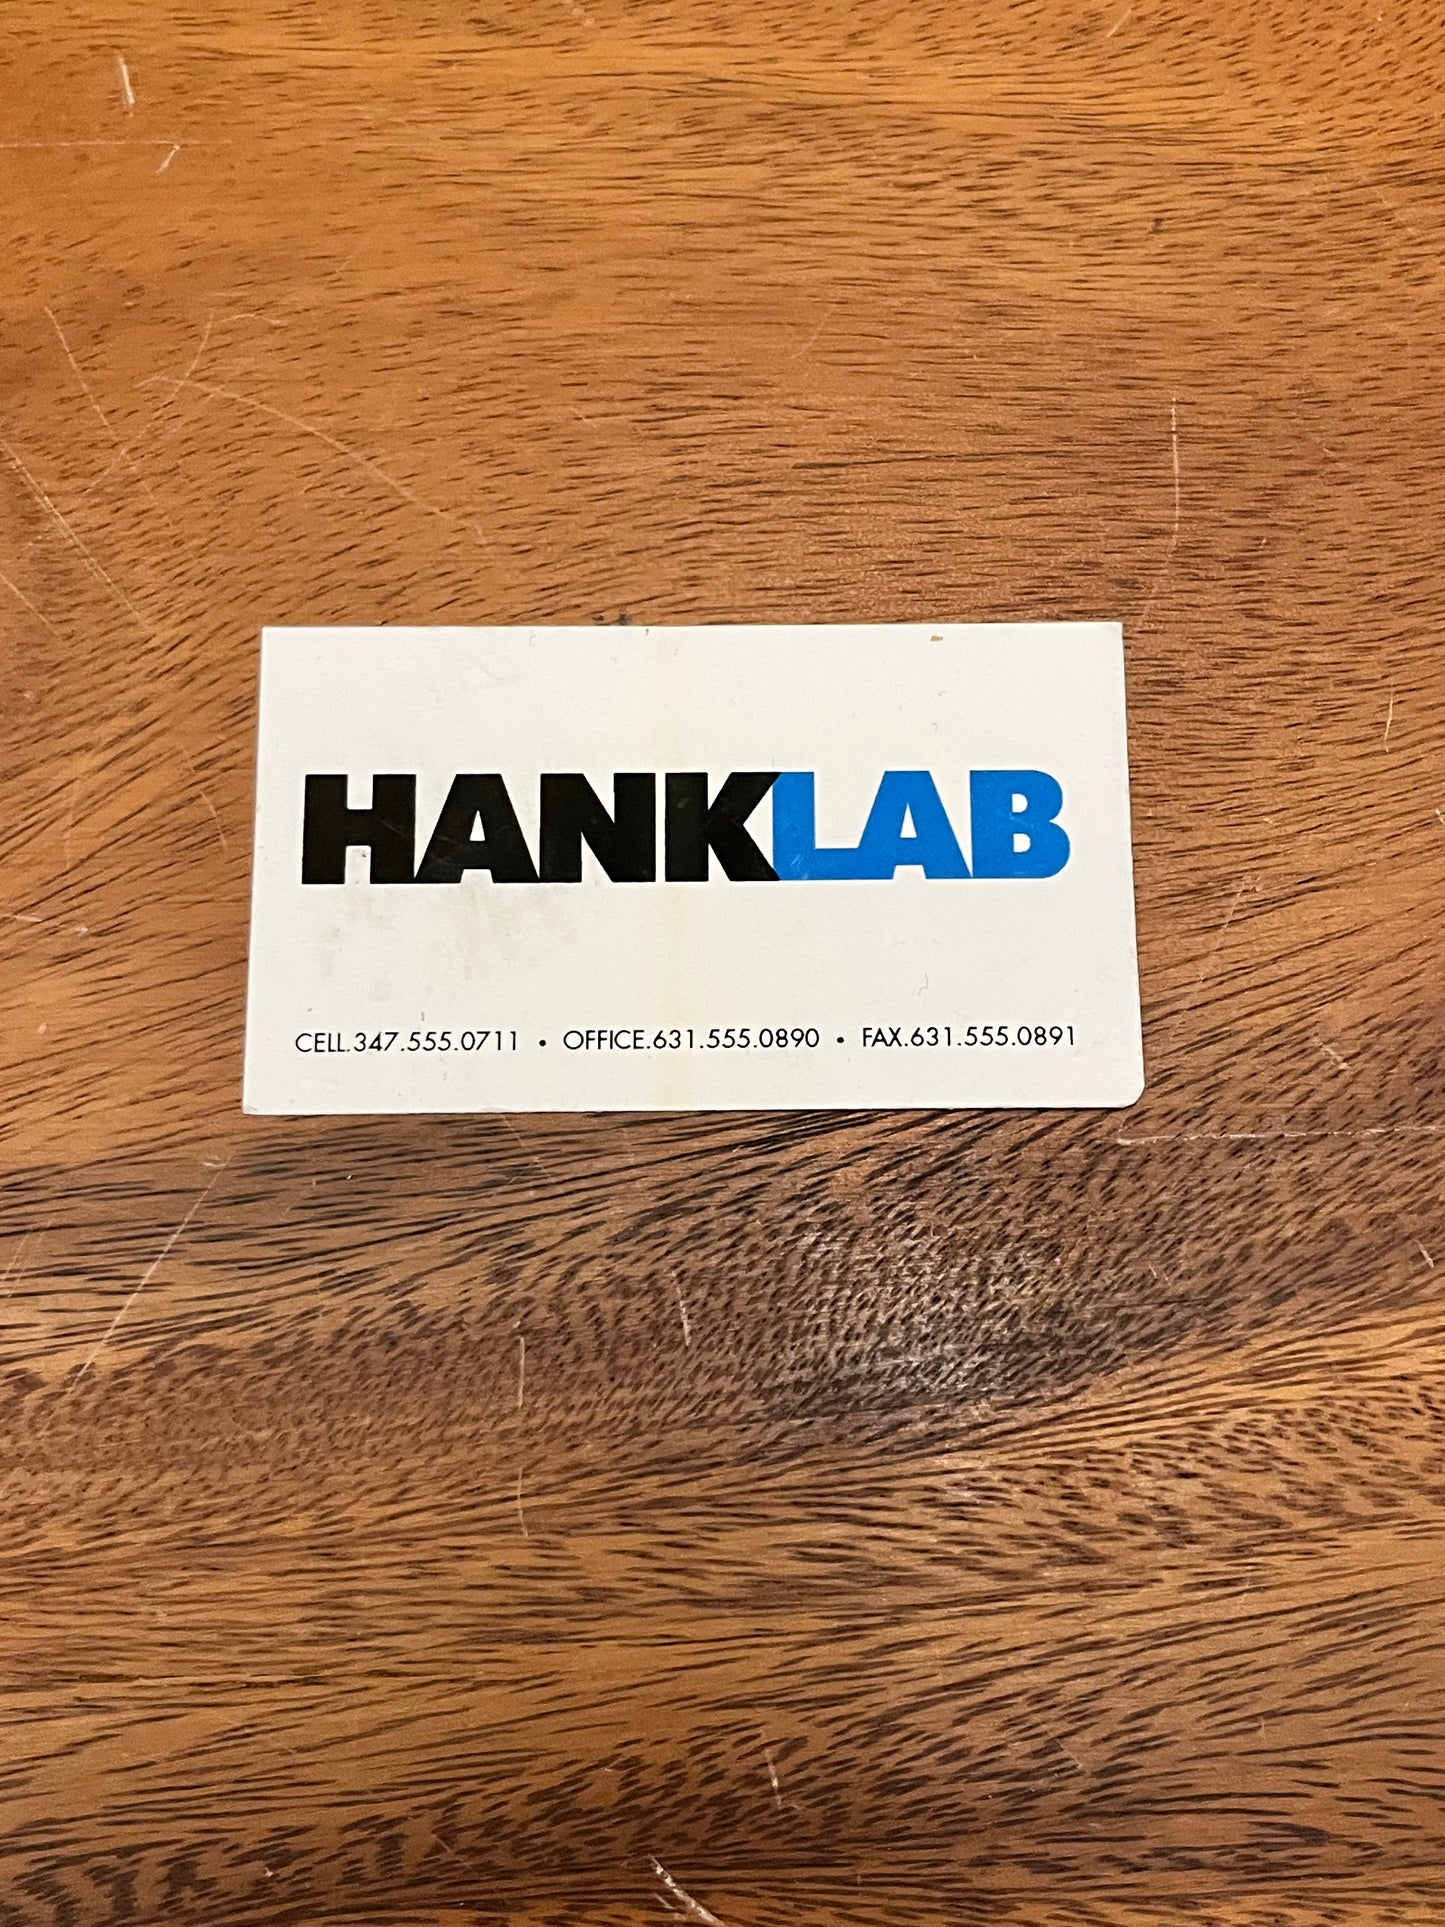 Royal Pains: Hank Lawson’s HANKMED / HANKLAB Business Cards (2)